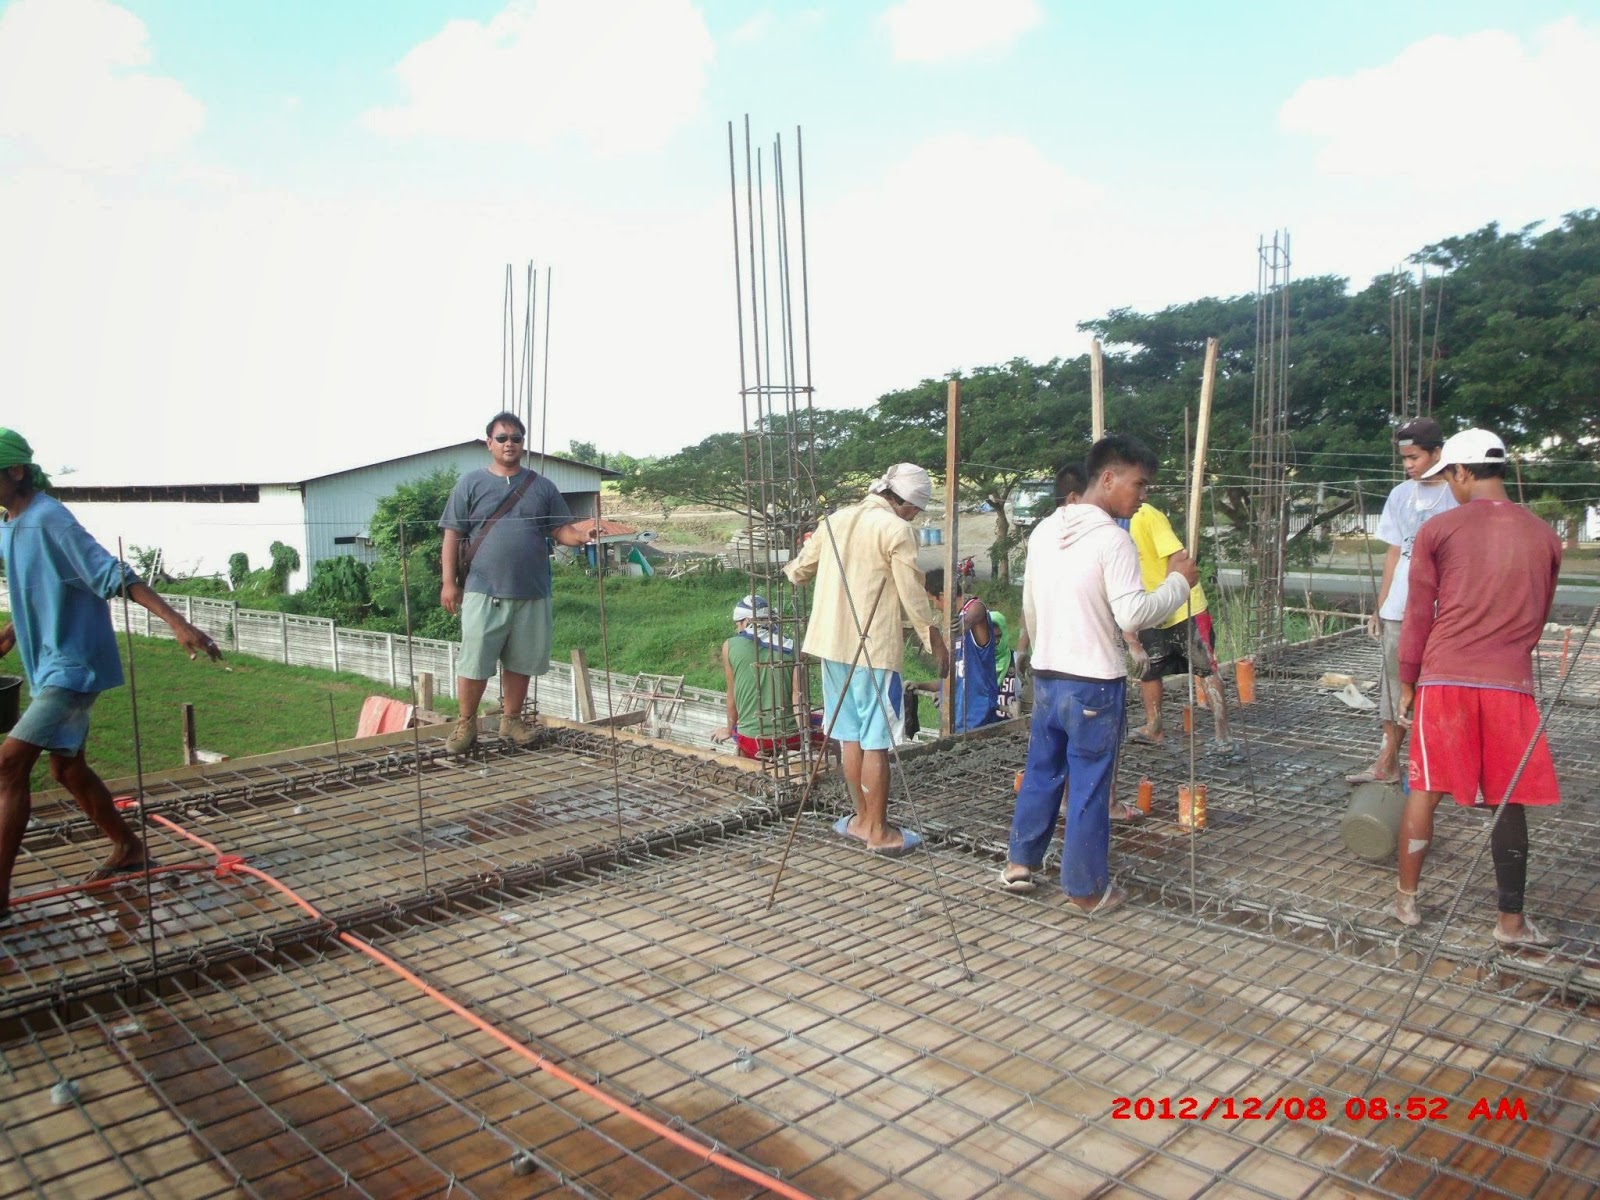 Savannah Trails house construction project in Oton, Iloilo ...